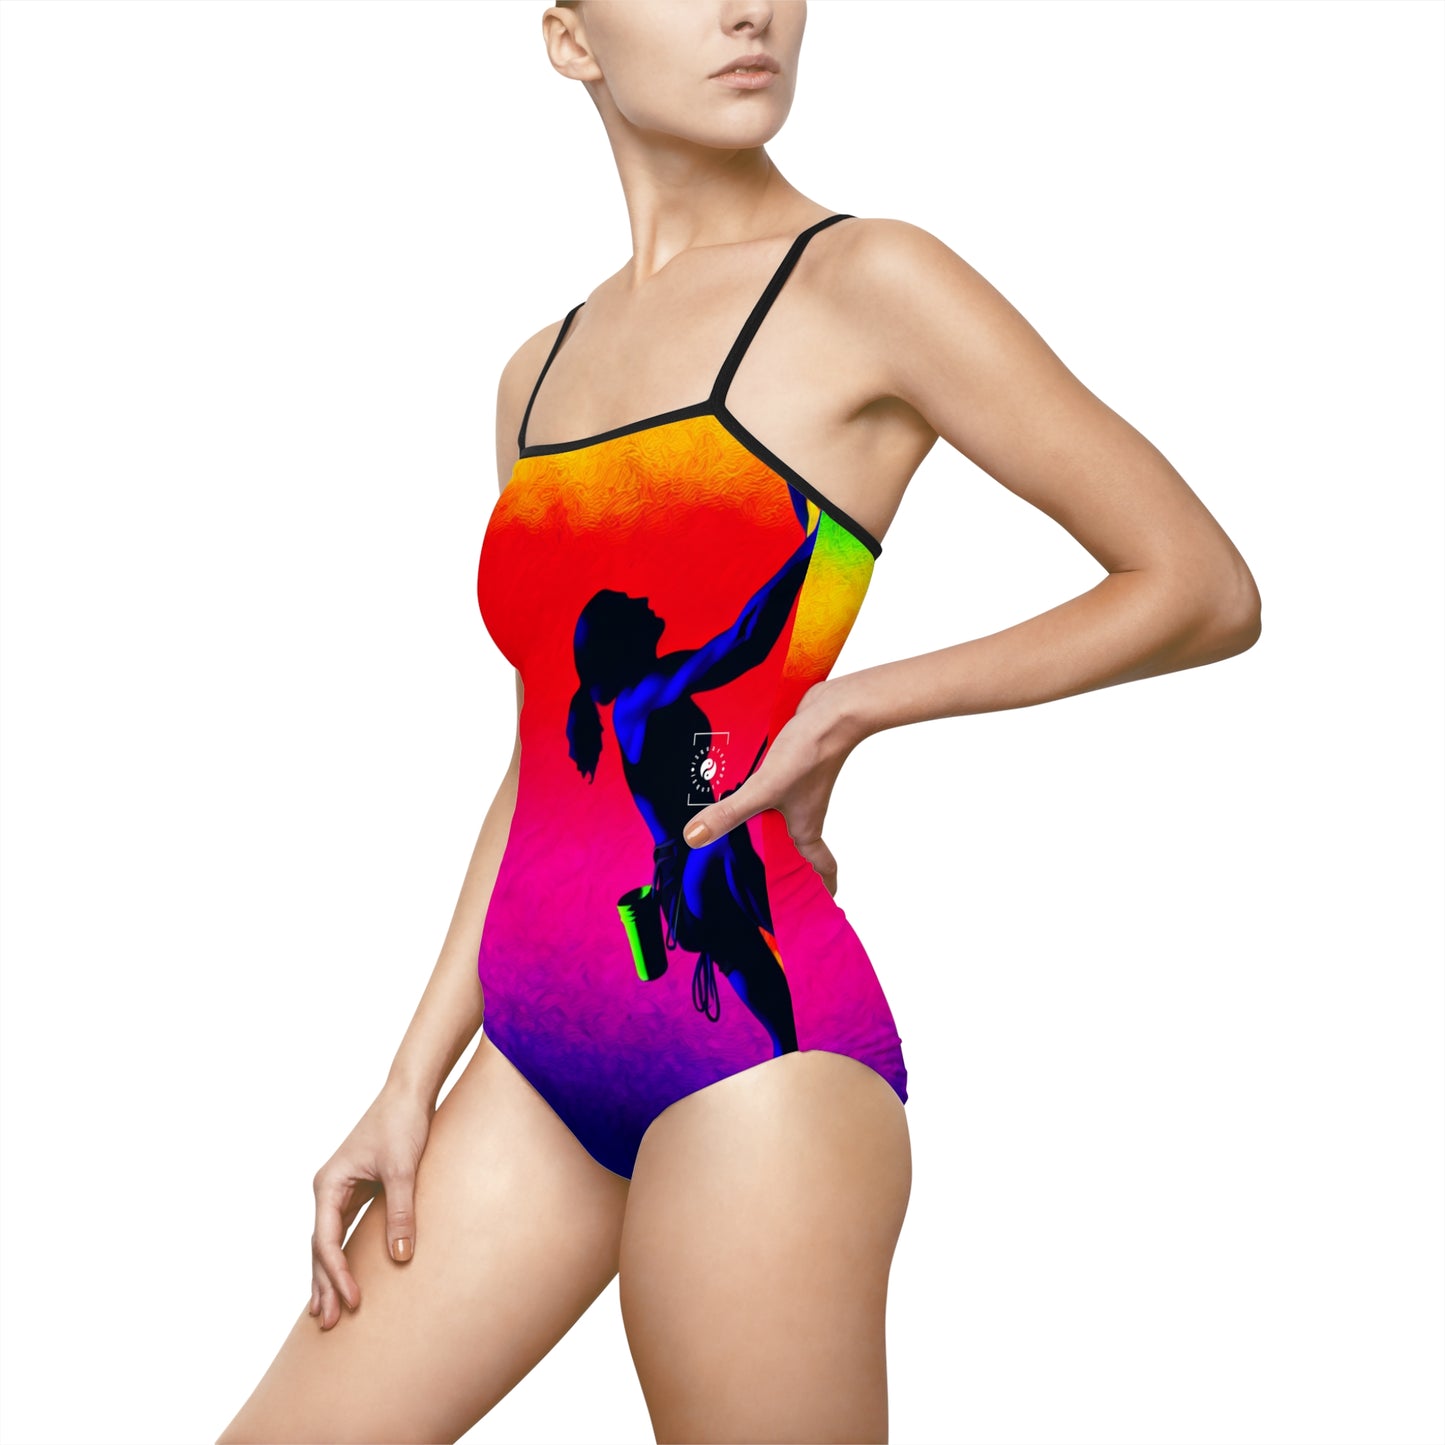 "Technicolour Ascent: The Digital Highline" - Openback Swimsuit